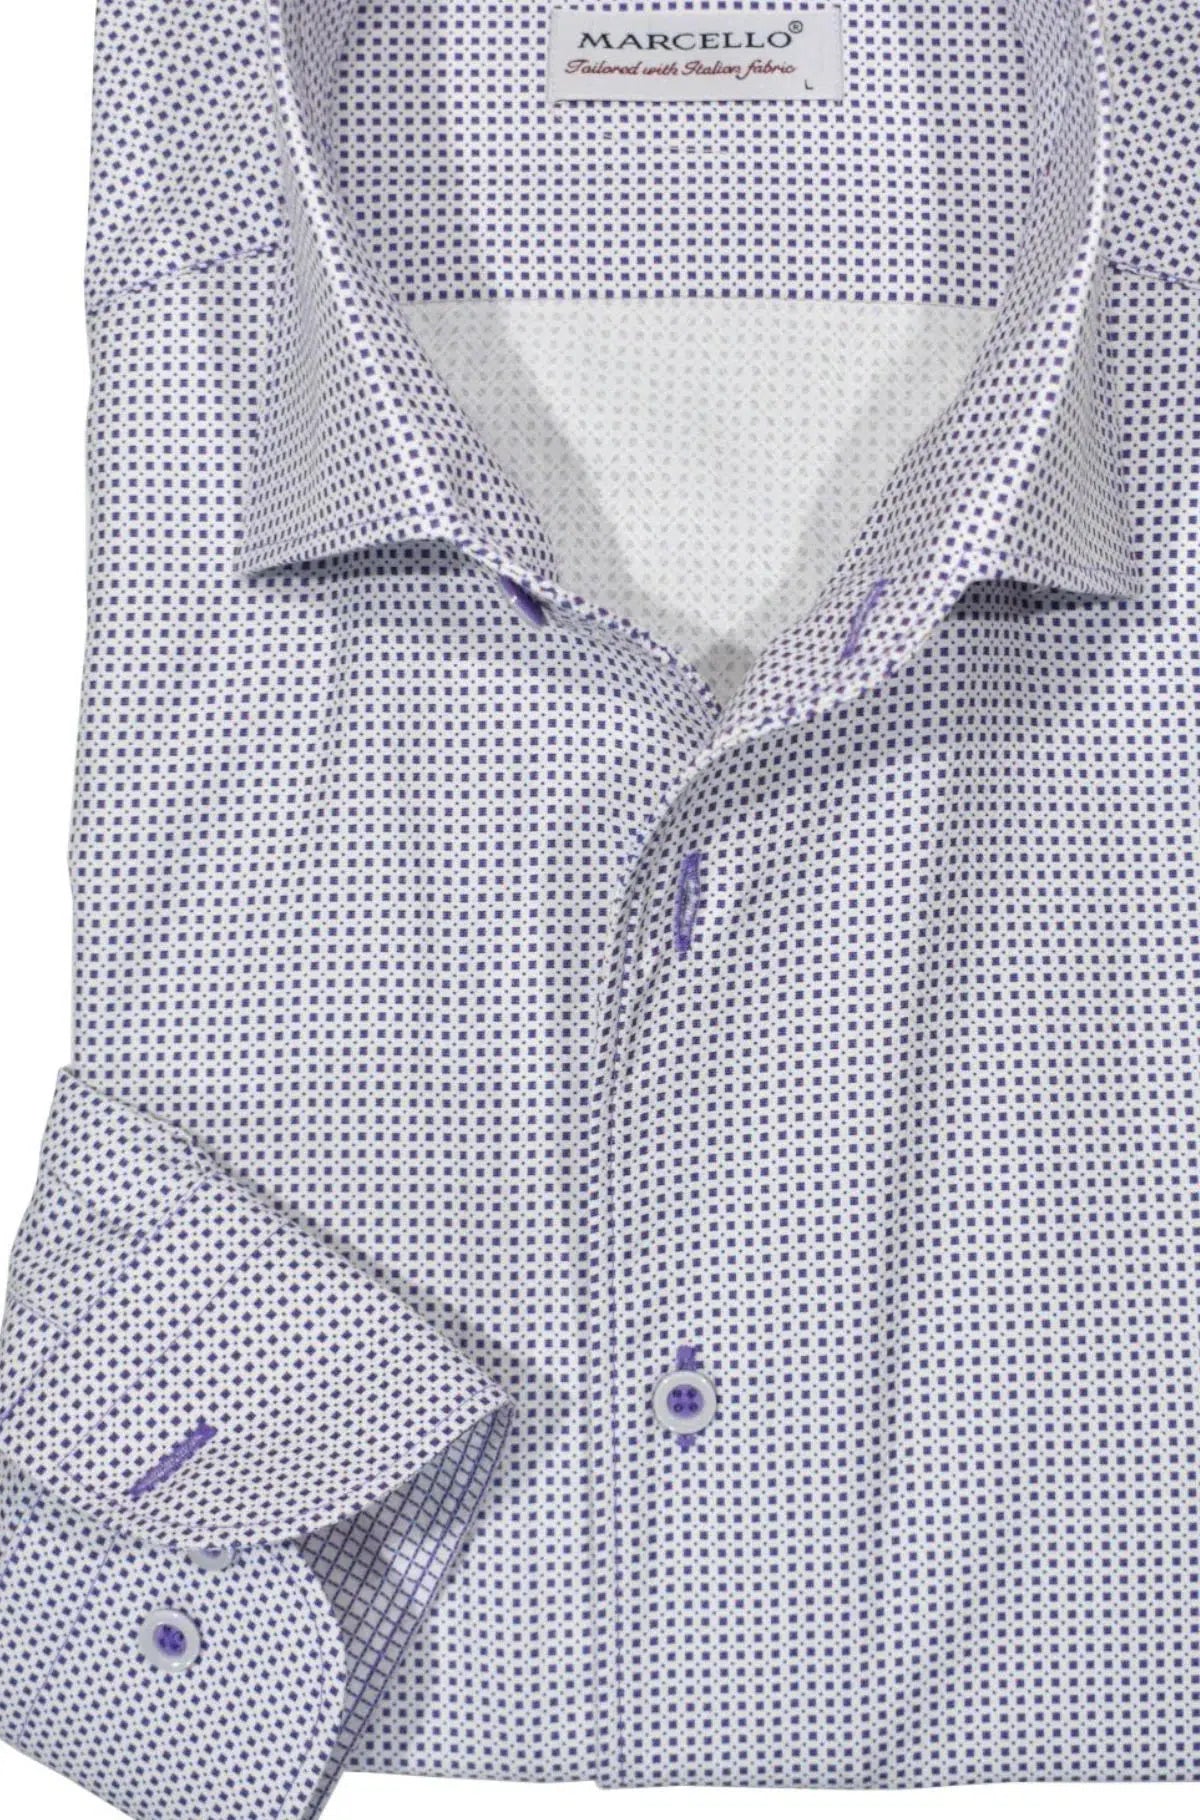 CMW727R - Cuadra purple casual fashion cotton shirt for men